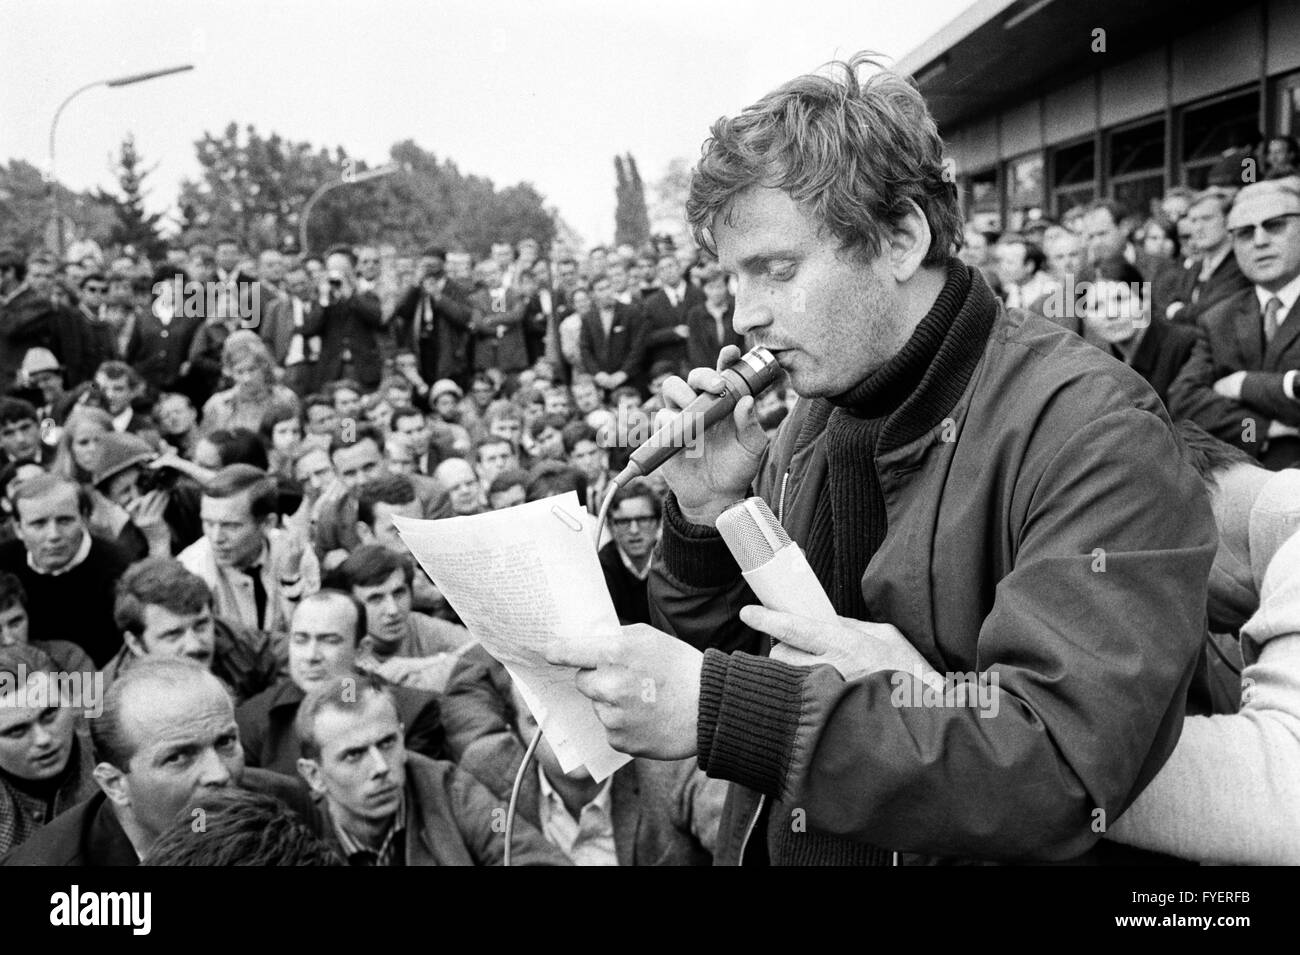 Daniel Cohn-Bendit delivers a statement. Daniel-Cohn Bendit's attempt to enter France across the border 'Goldene Bremm' near Saarbruecken despite a refusal of entry failed on 24 May 1968. Stock Photo